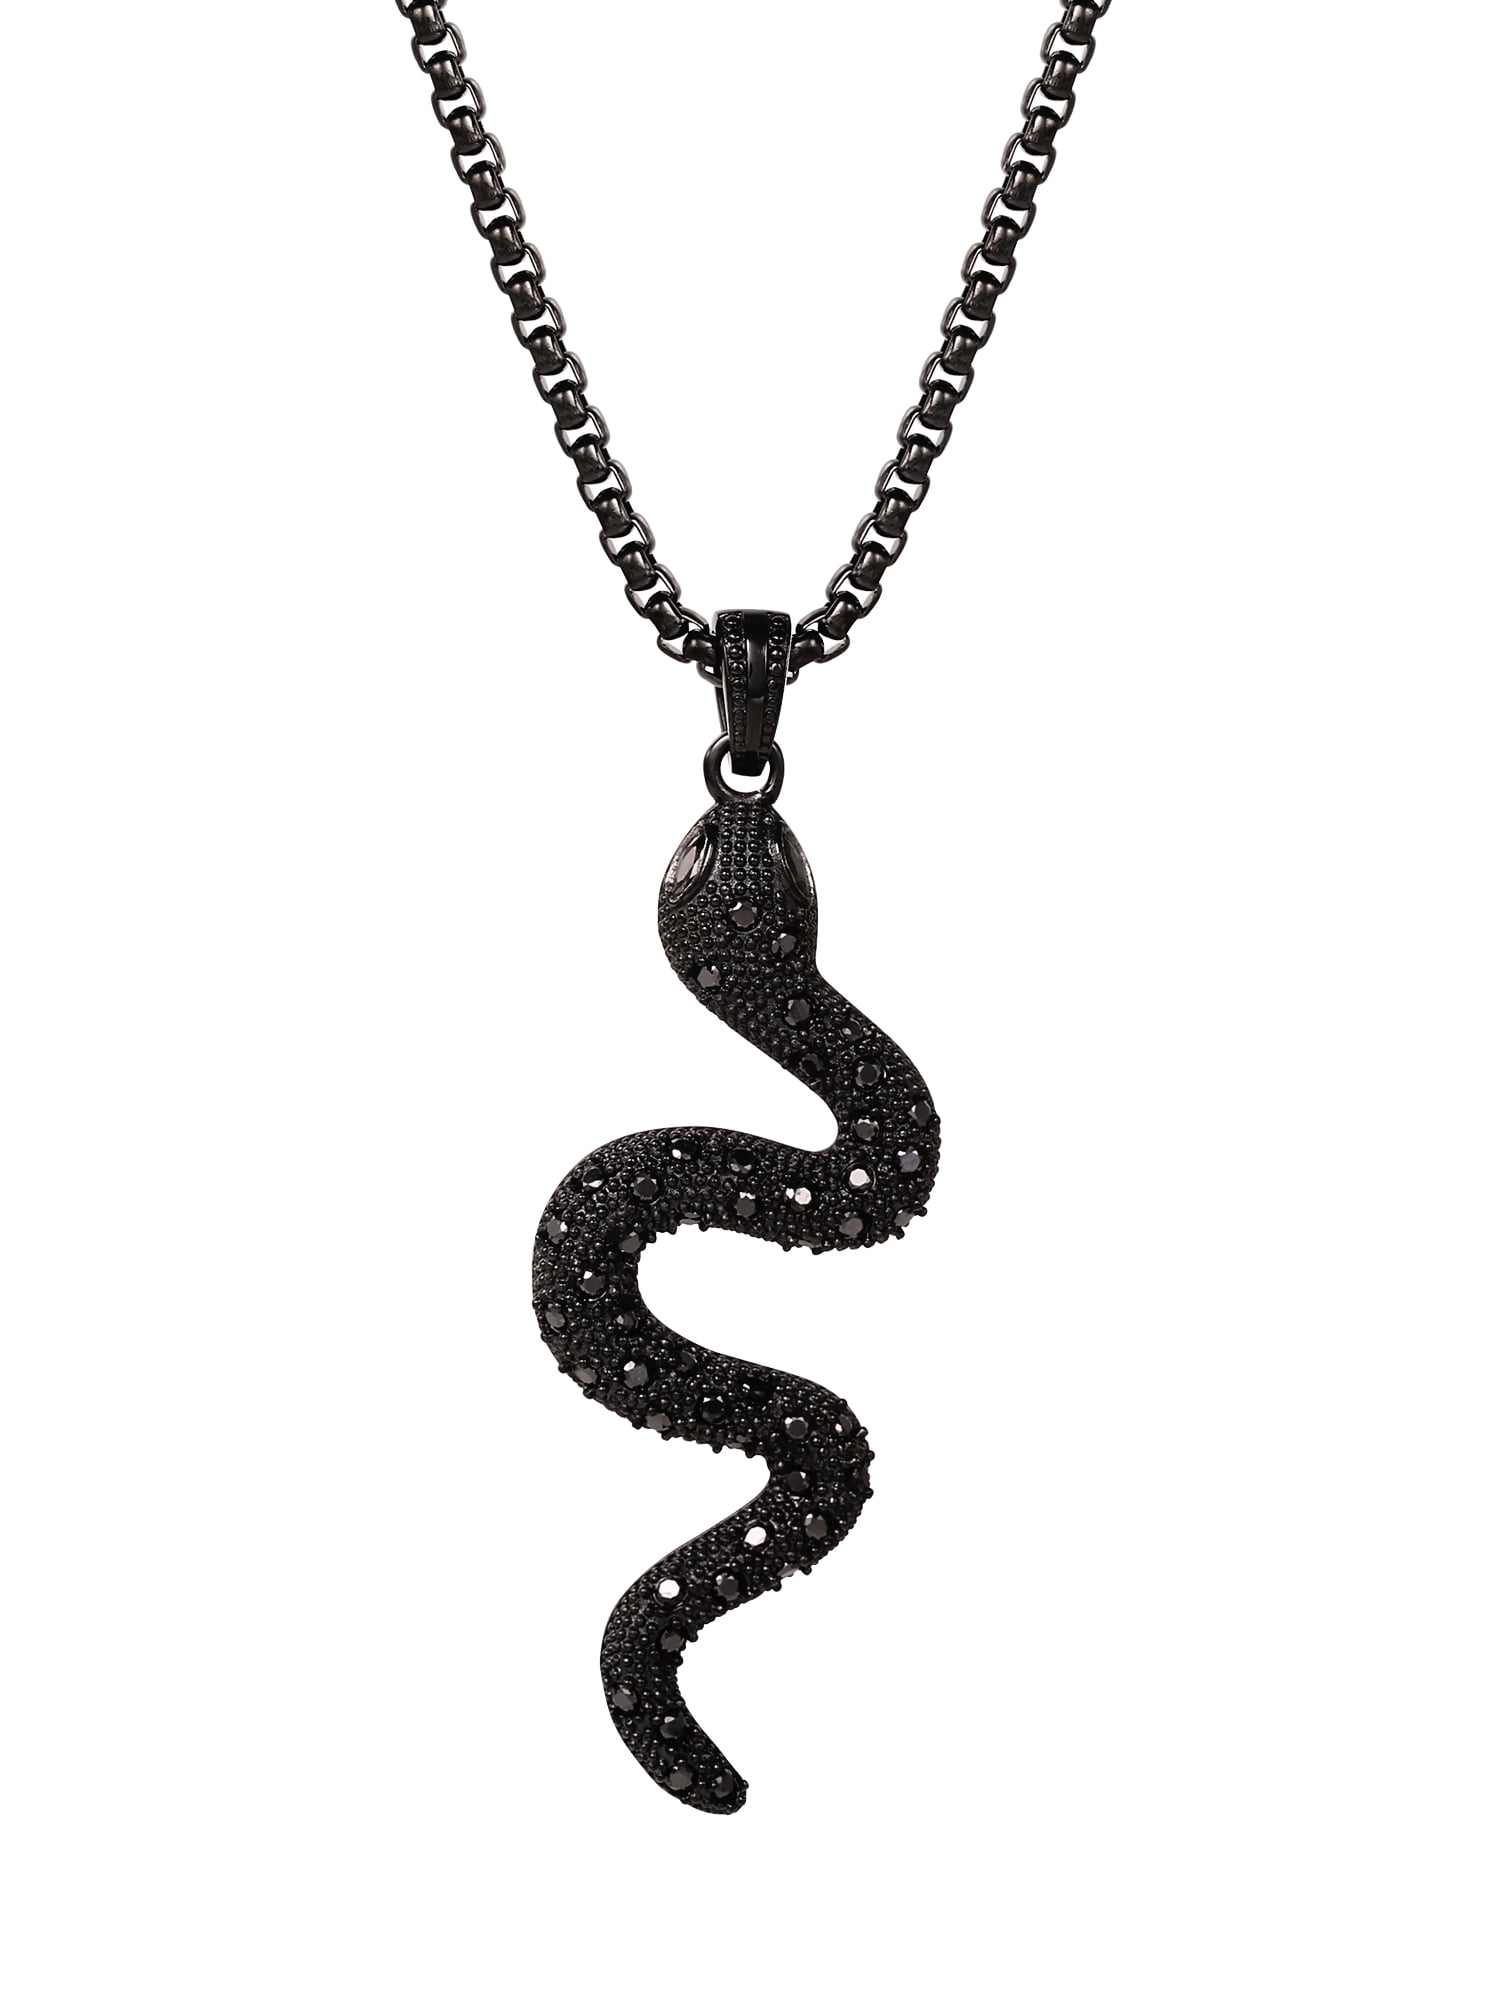 Silver/Gold/Black Tone Fashion Men's Lion  Stainless Steel Pendant Necklace 